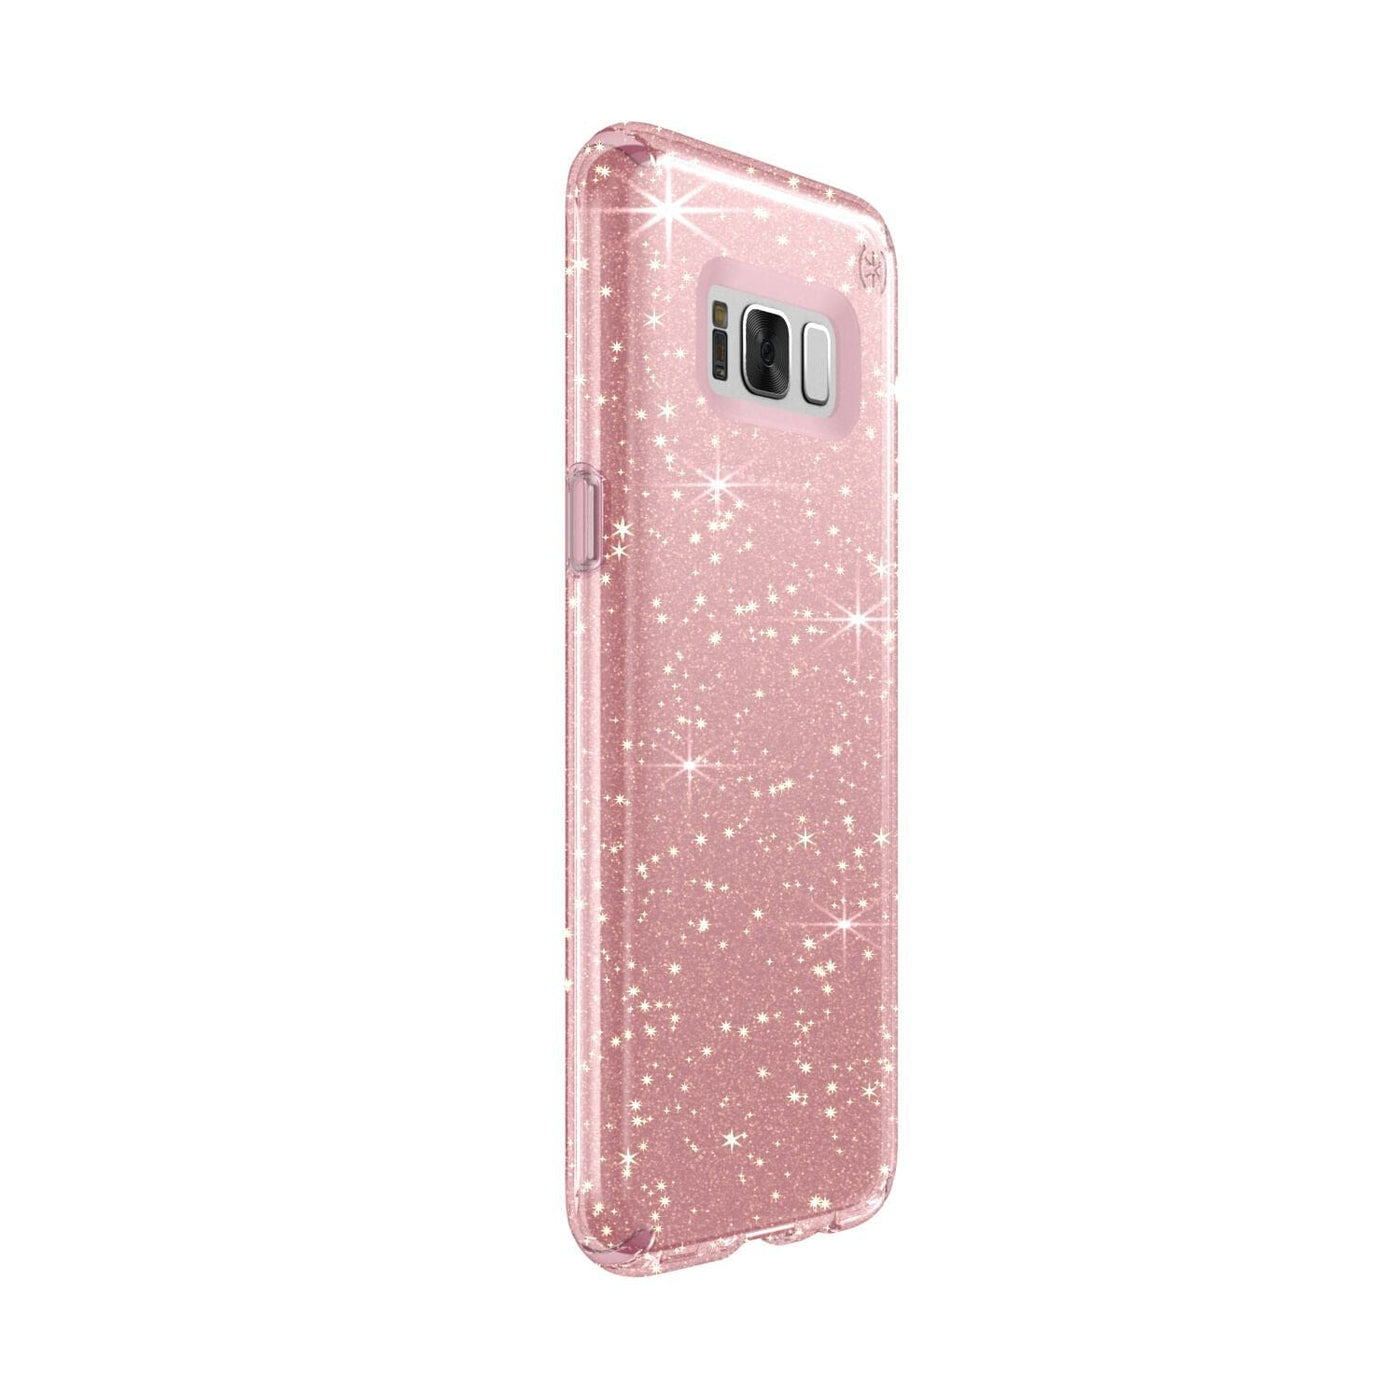 Speck Presidio Clear + Glitter Samsung Galaxy S8 Cases Best Galaxy S8 -  $44.95